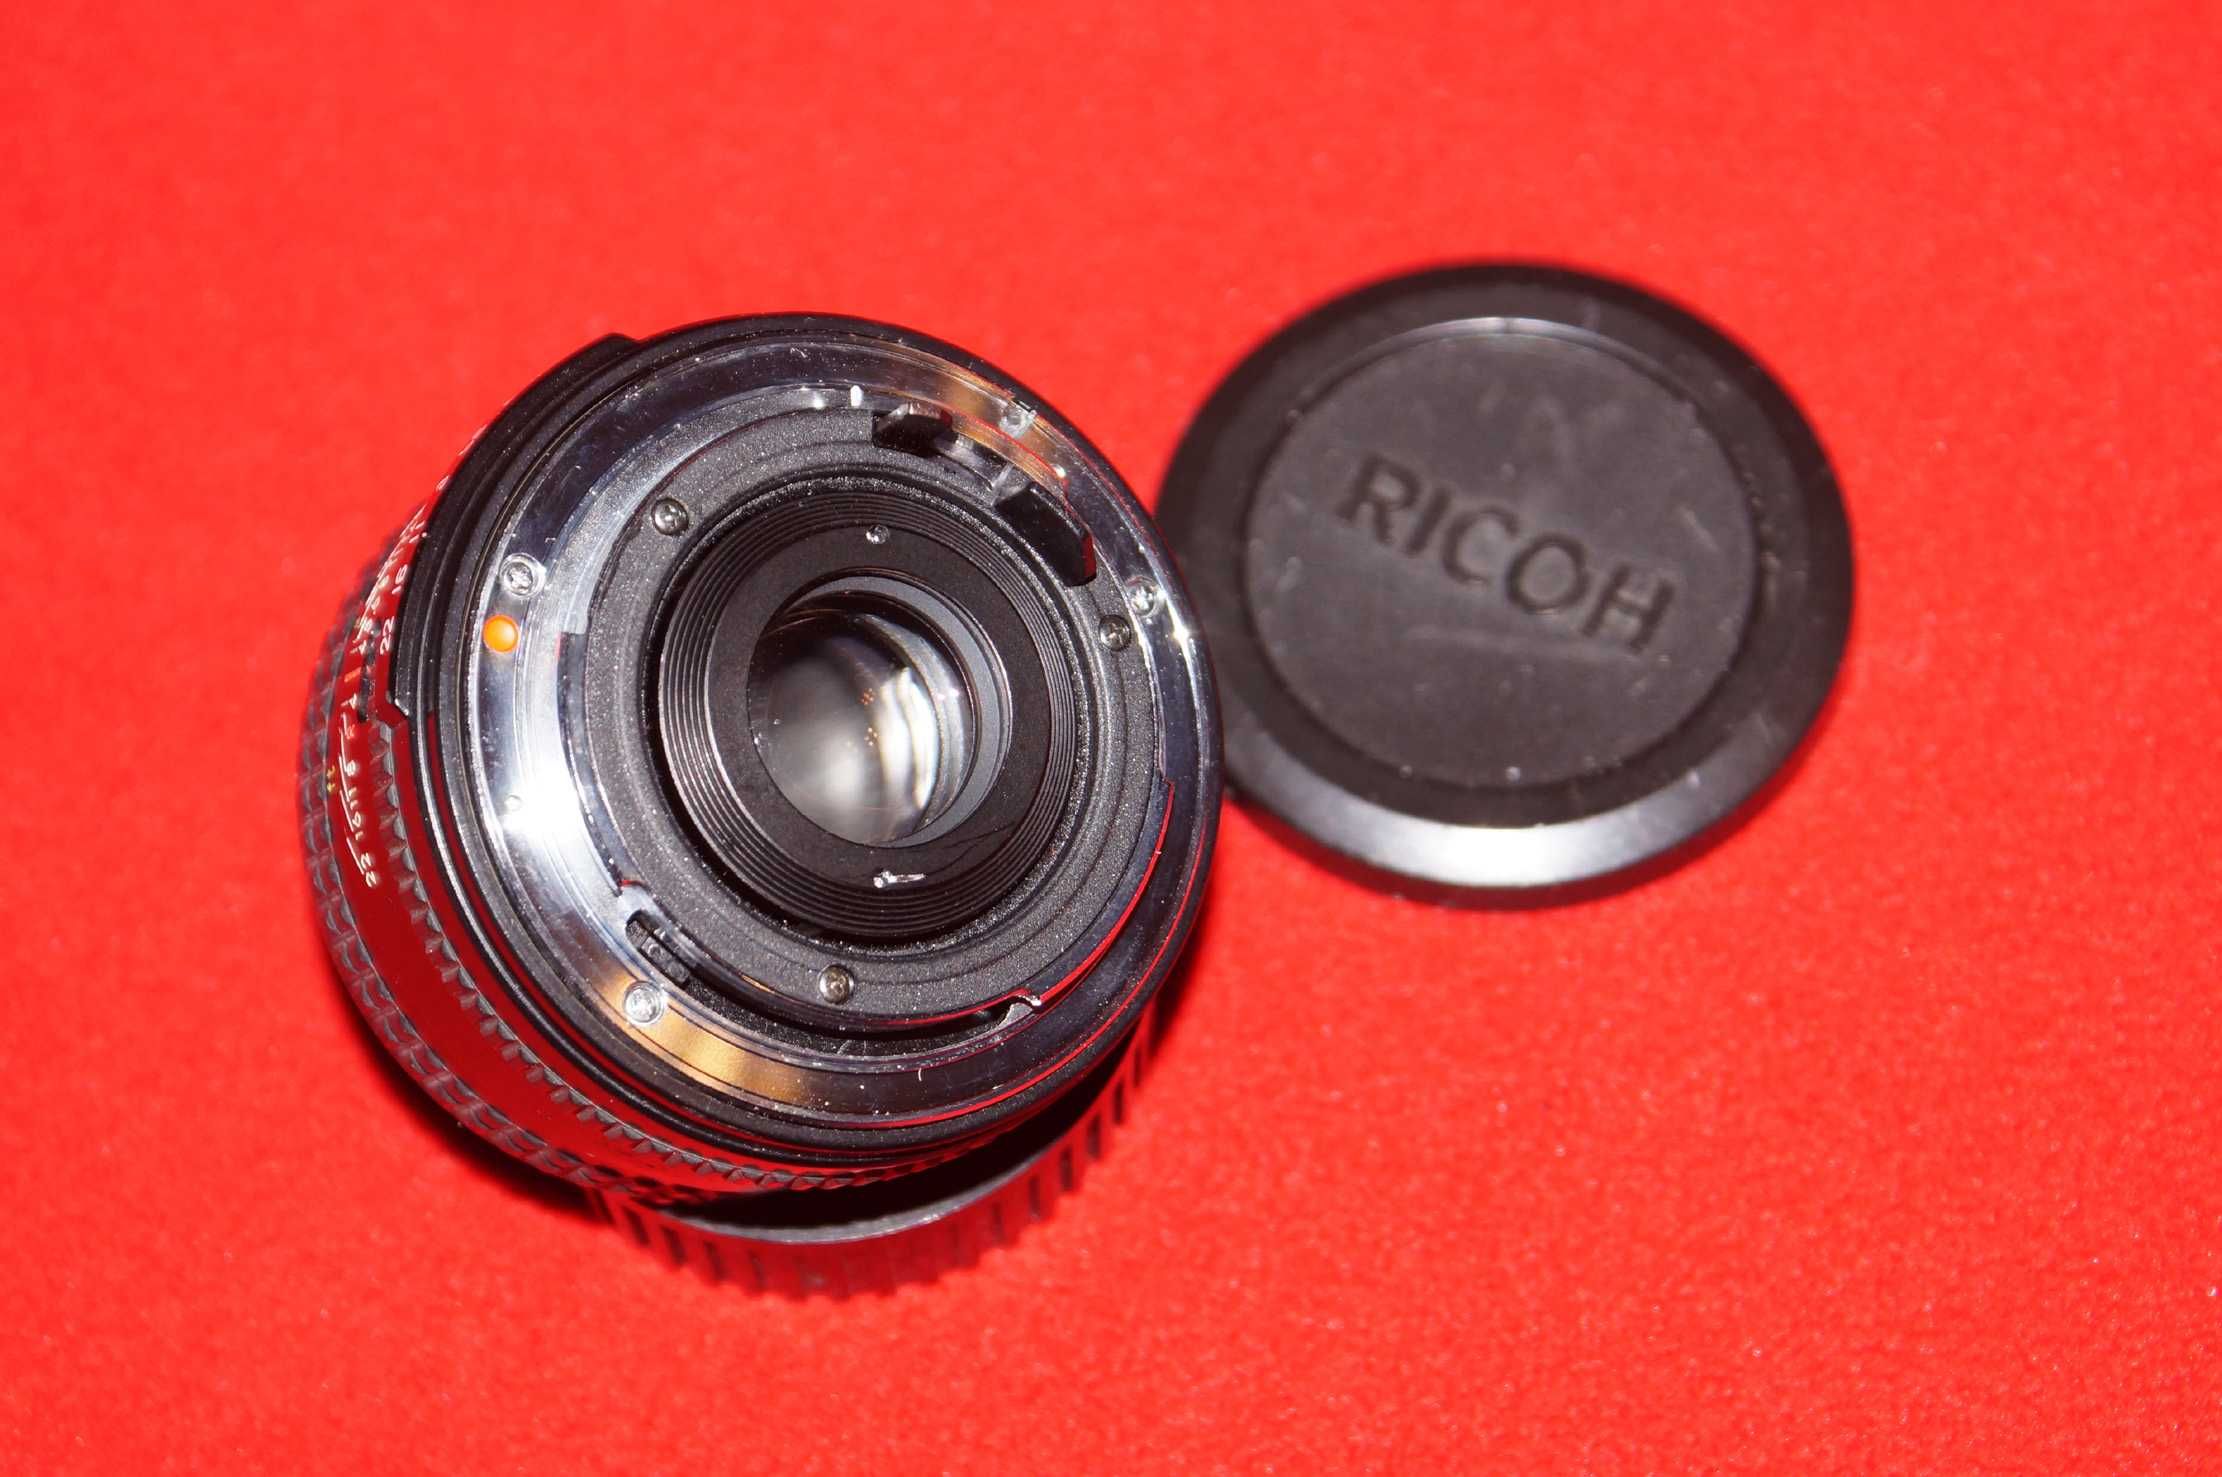 Rikenon 24mm f/2.8 Pentax